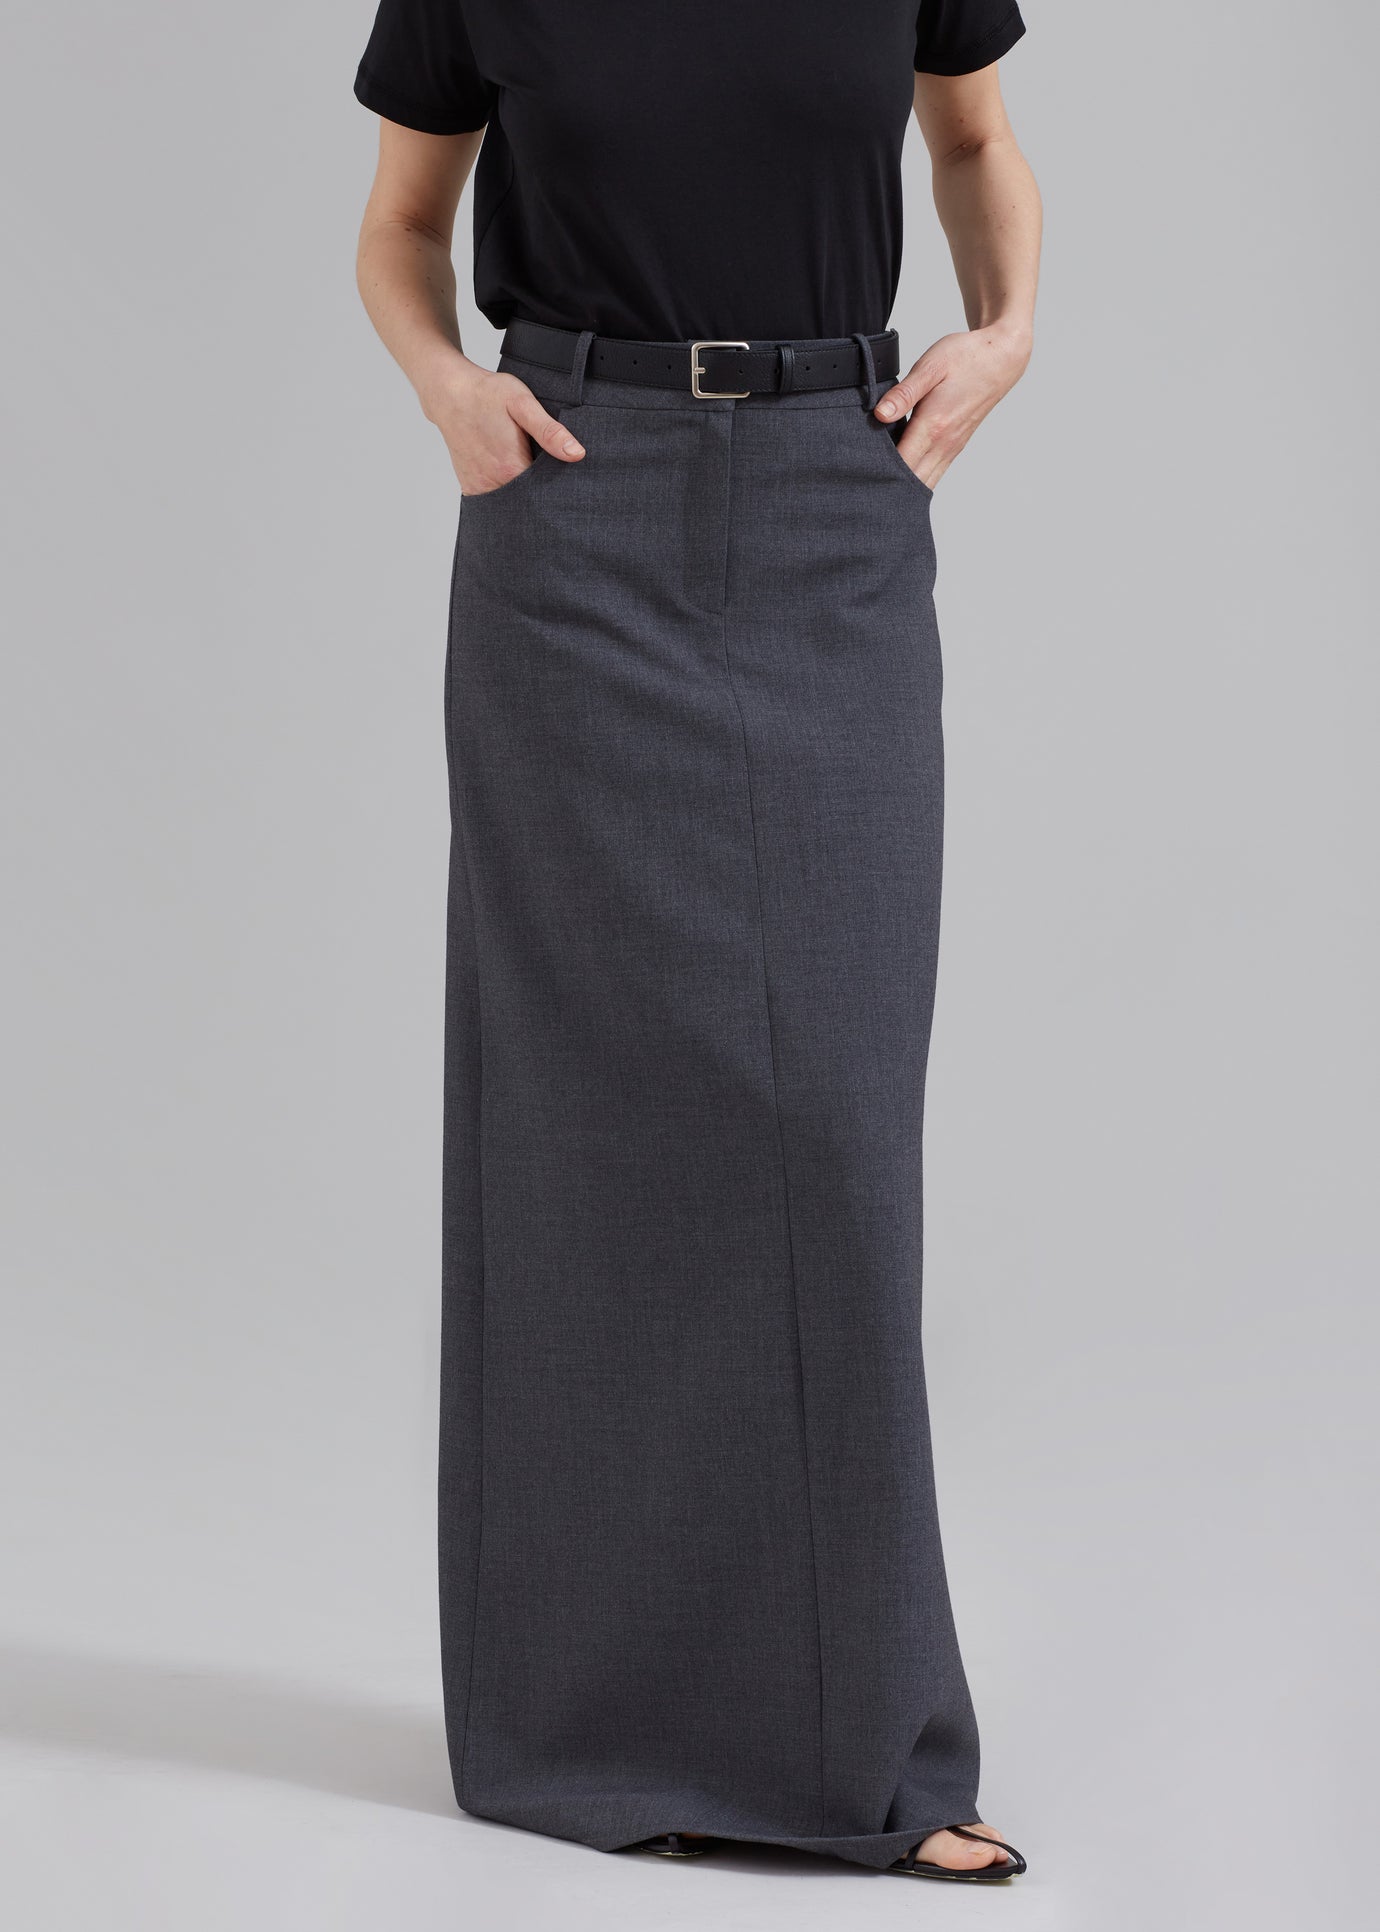 Malvo Long Pencil Skirt - Charcoal - 1